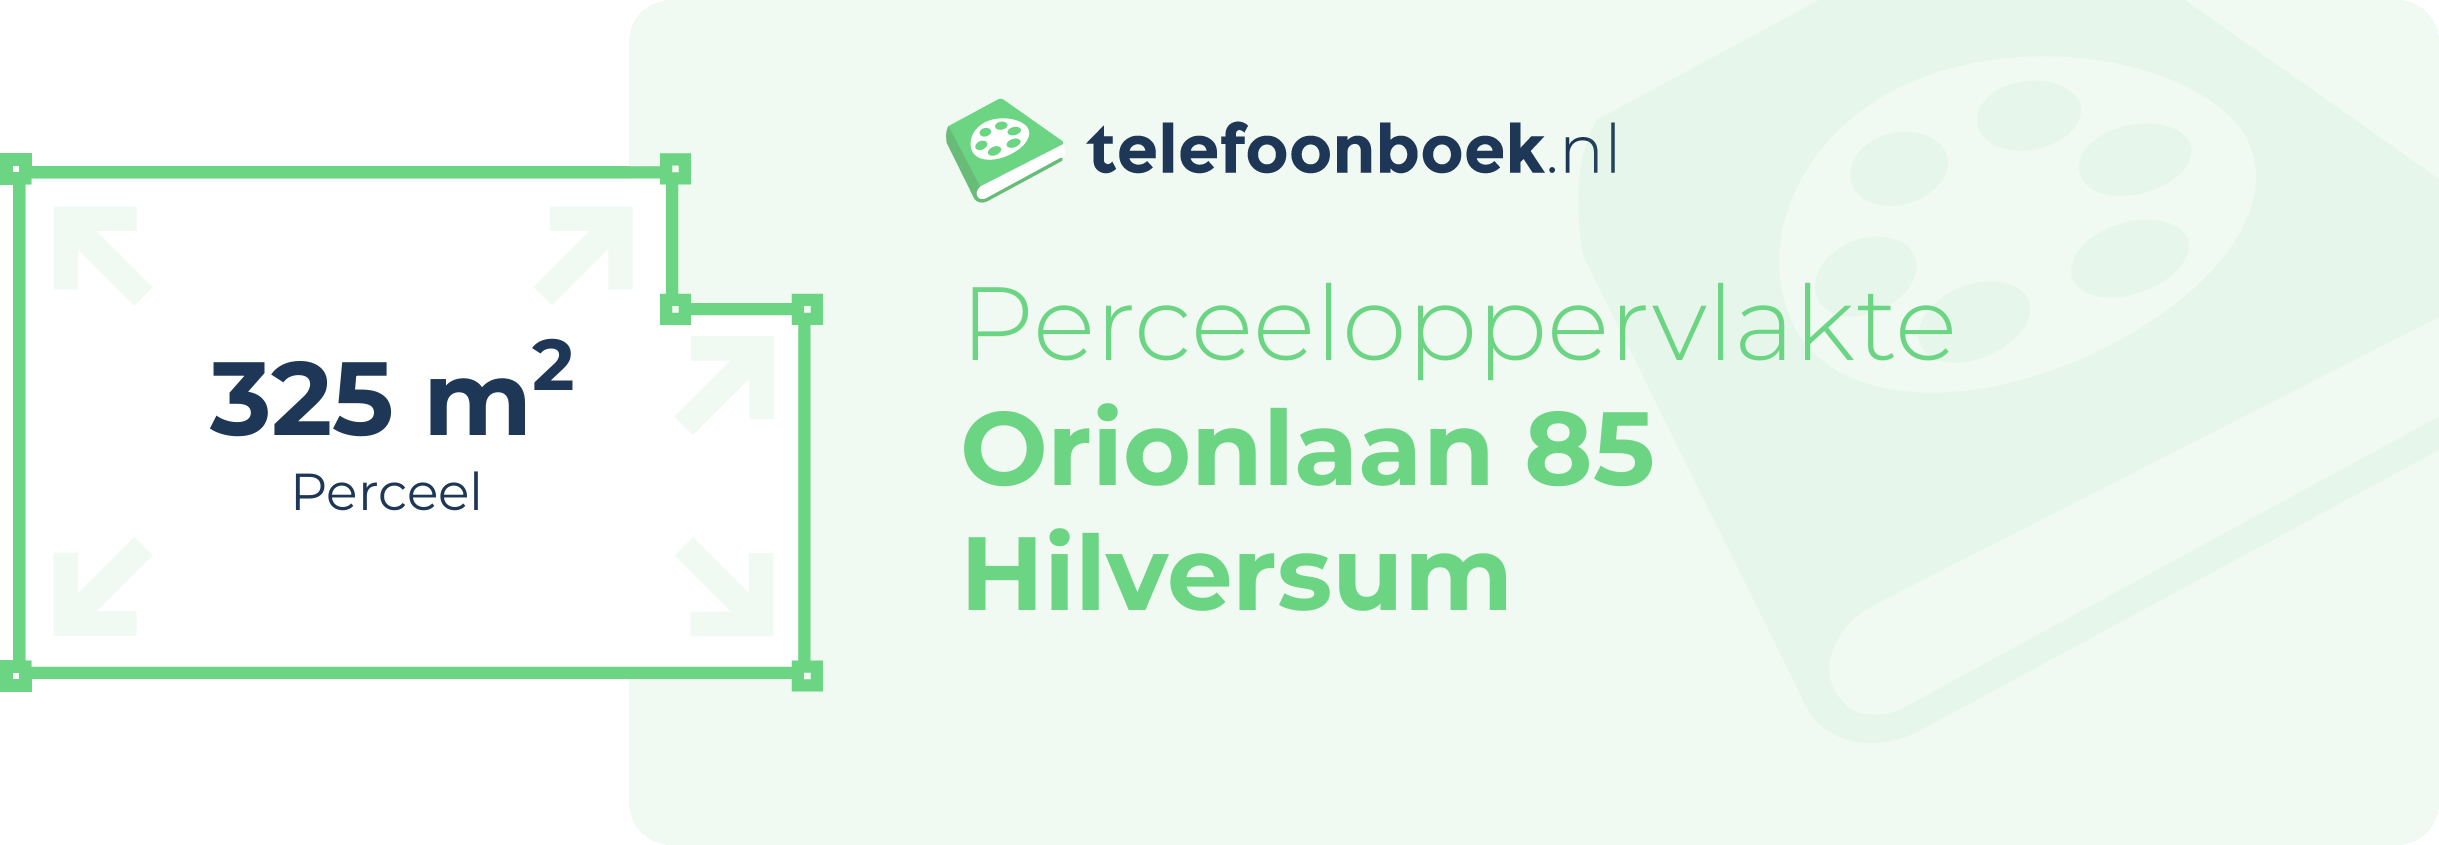 Perceeloppervlakte Orionlaan 85 Hilversum